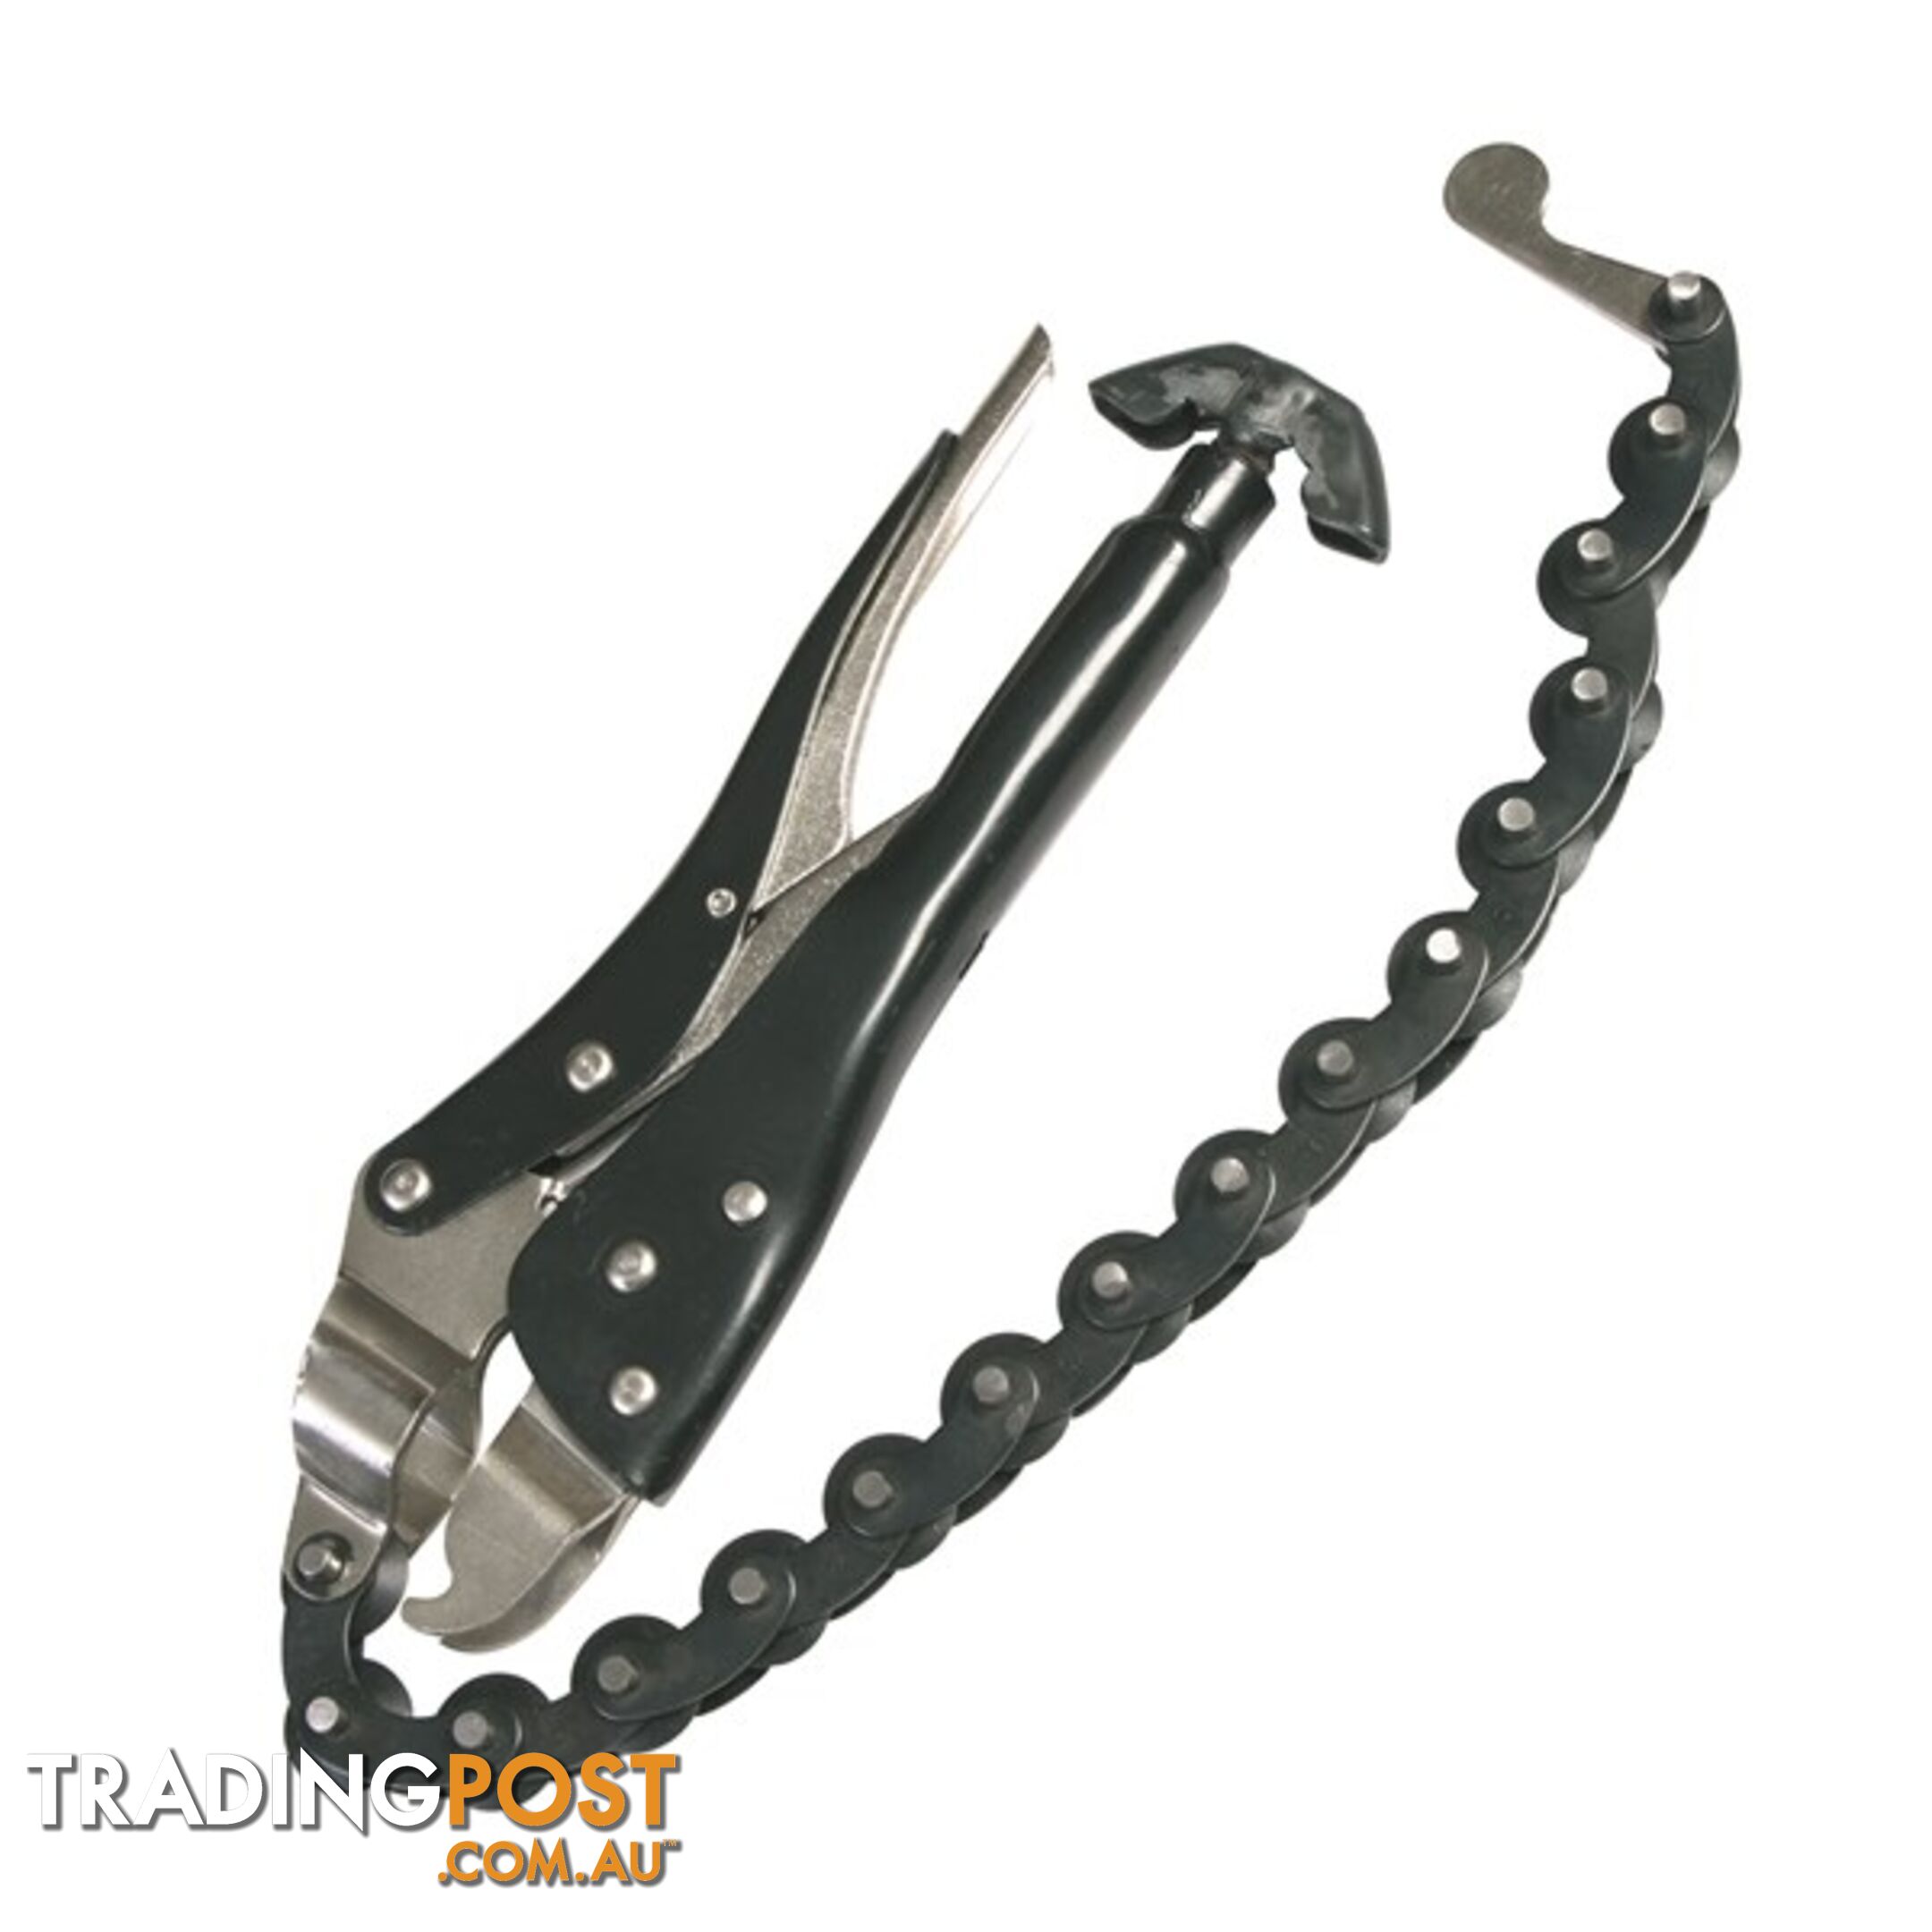 Toledo Exhaust   Tailpipe Cutter  - Lock Grip Type SKU - 312290